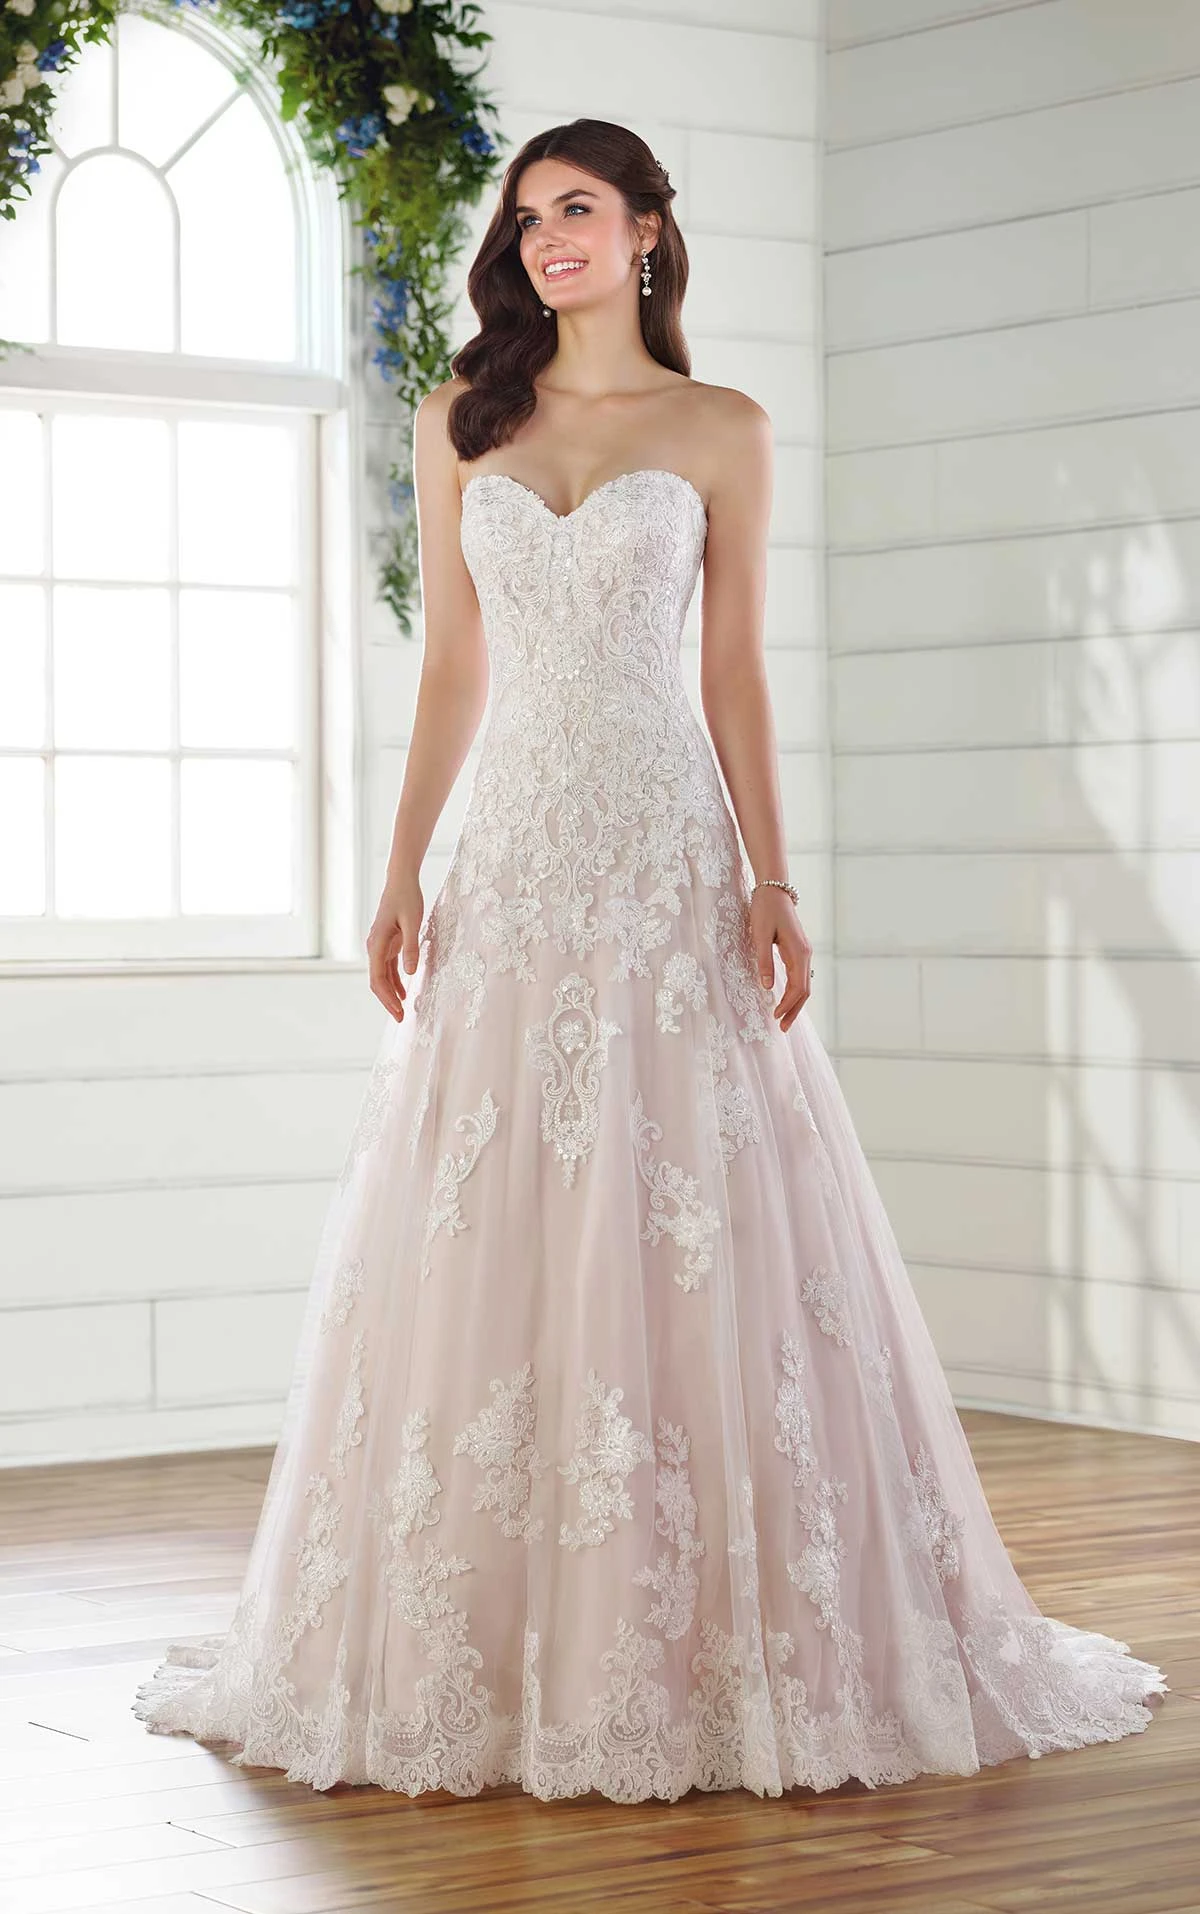 Sparkling ALine Lace Wedding Gown Essense of Australia